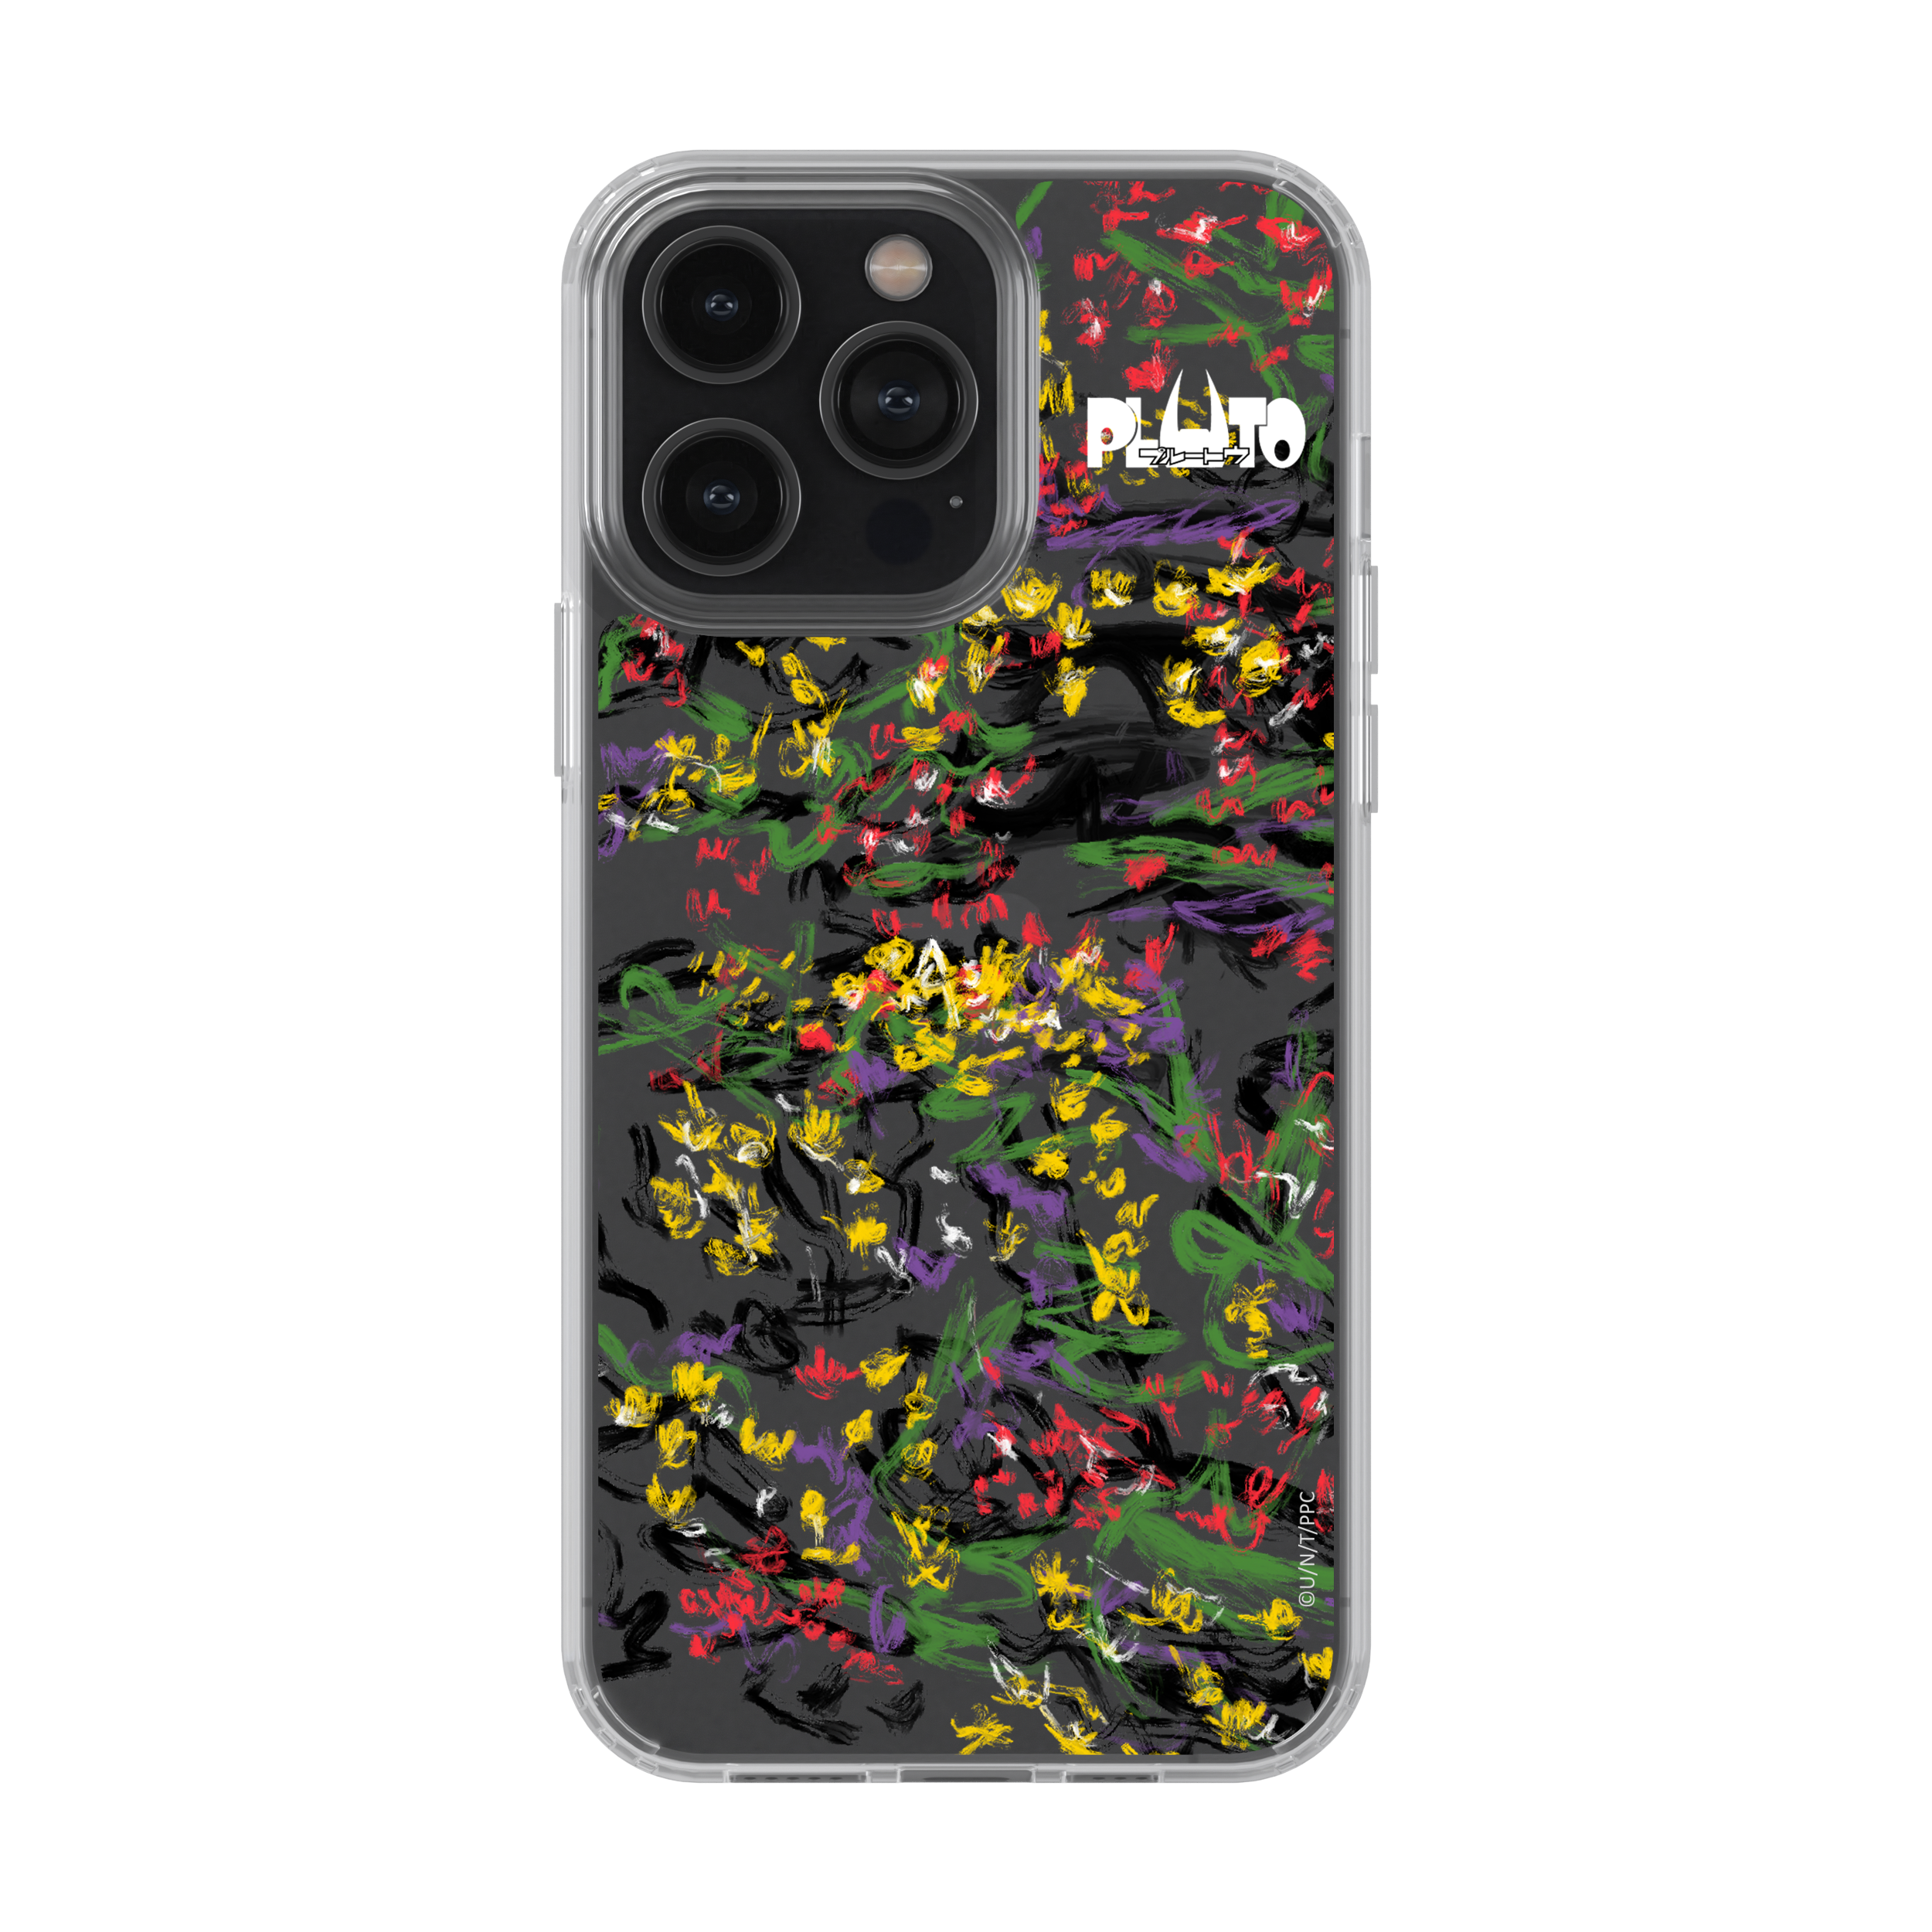 flower printed iPhone case